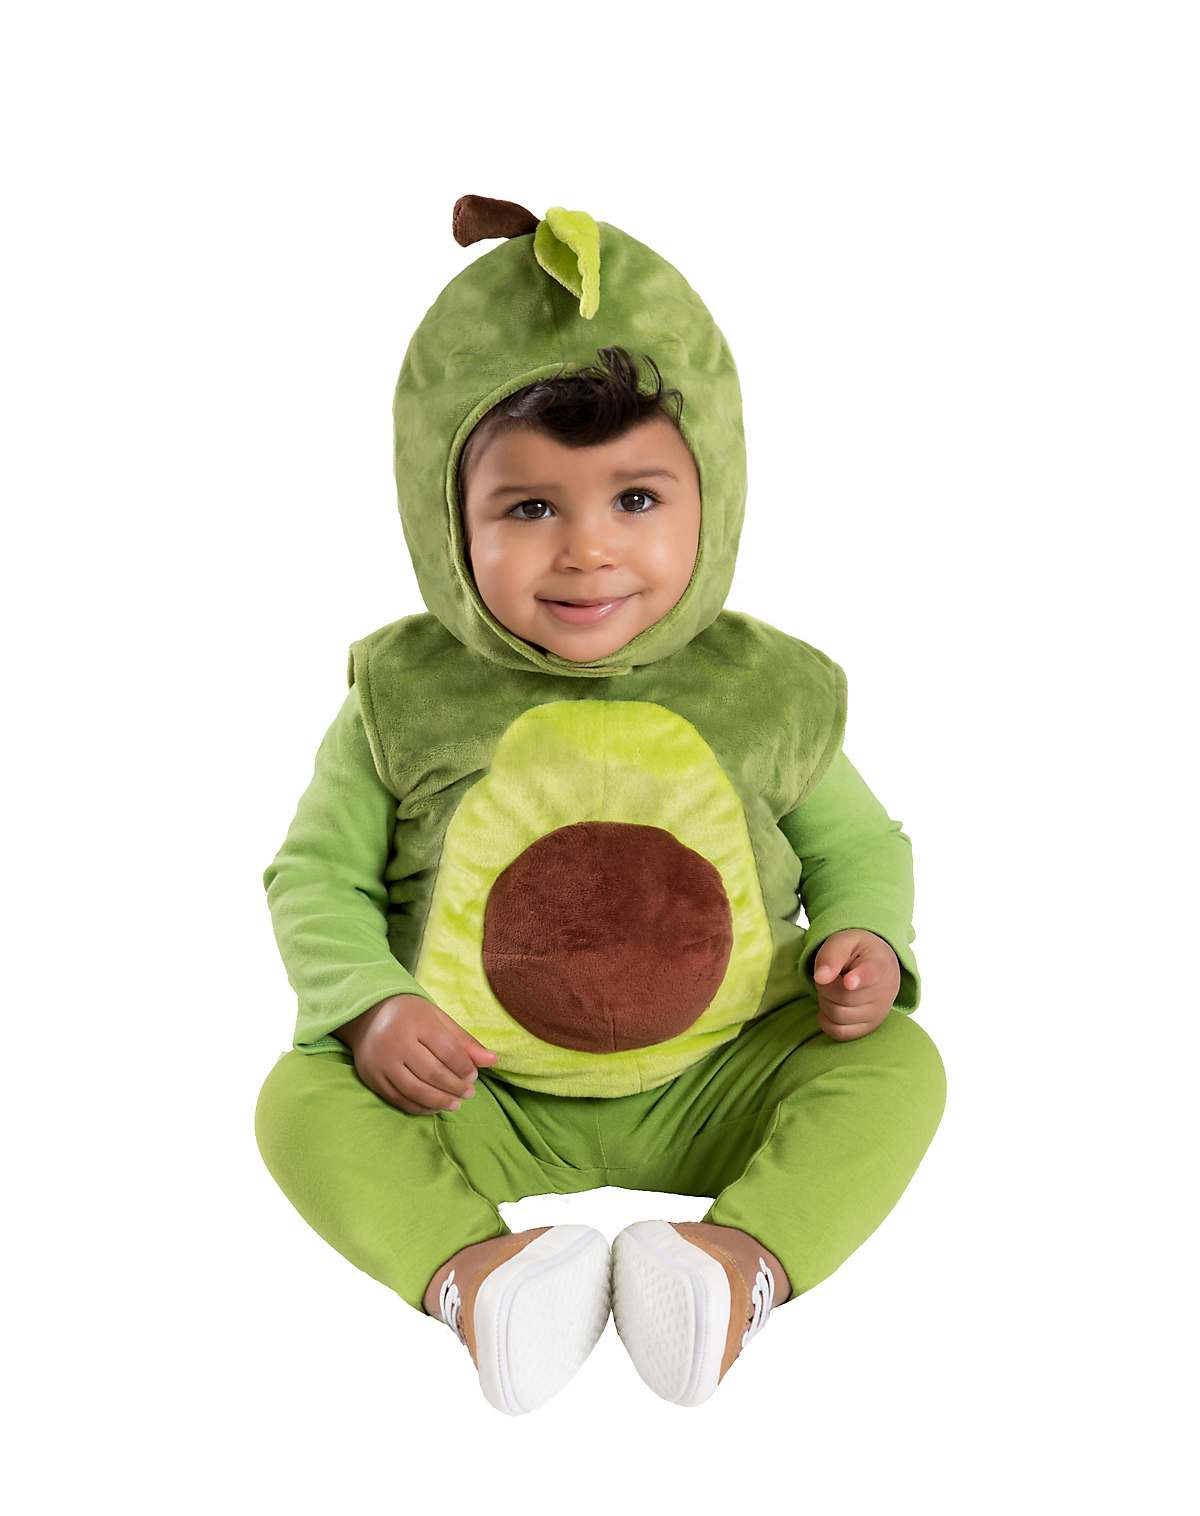 Baby plush avocado costume